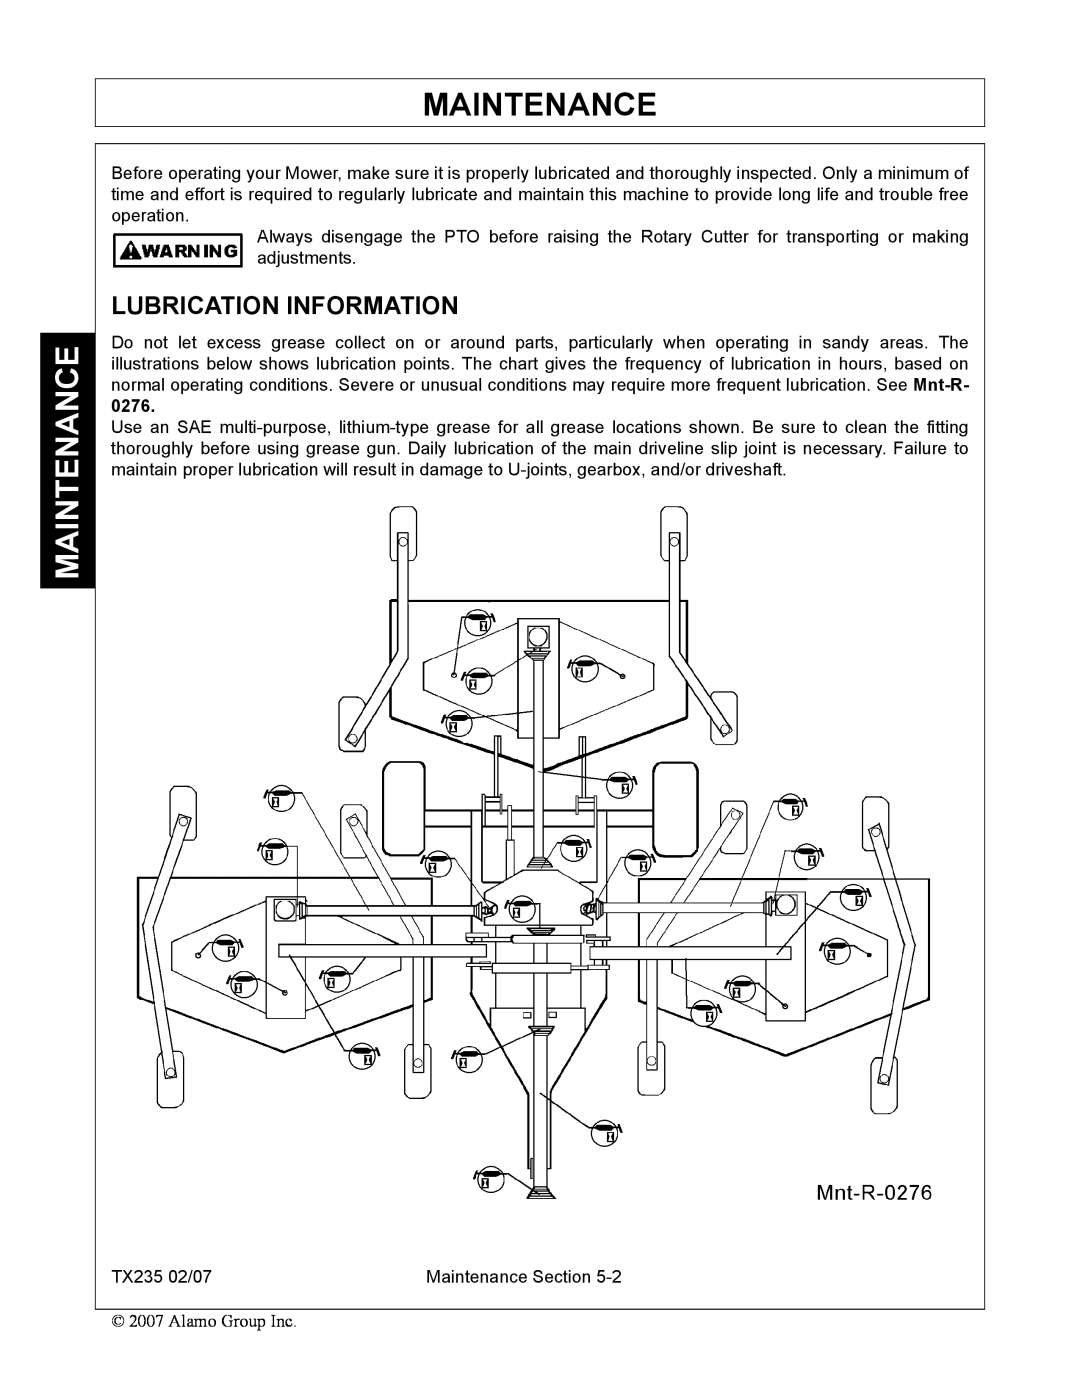 Alamo TX235 manual Maintenance, Lubrication Information 